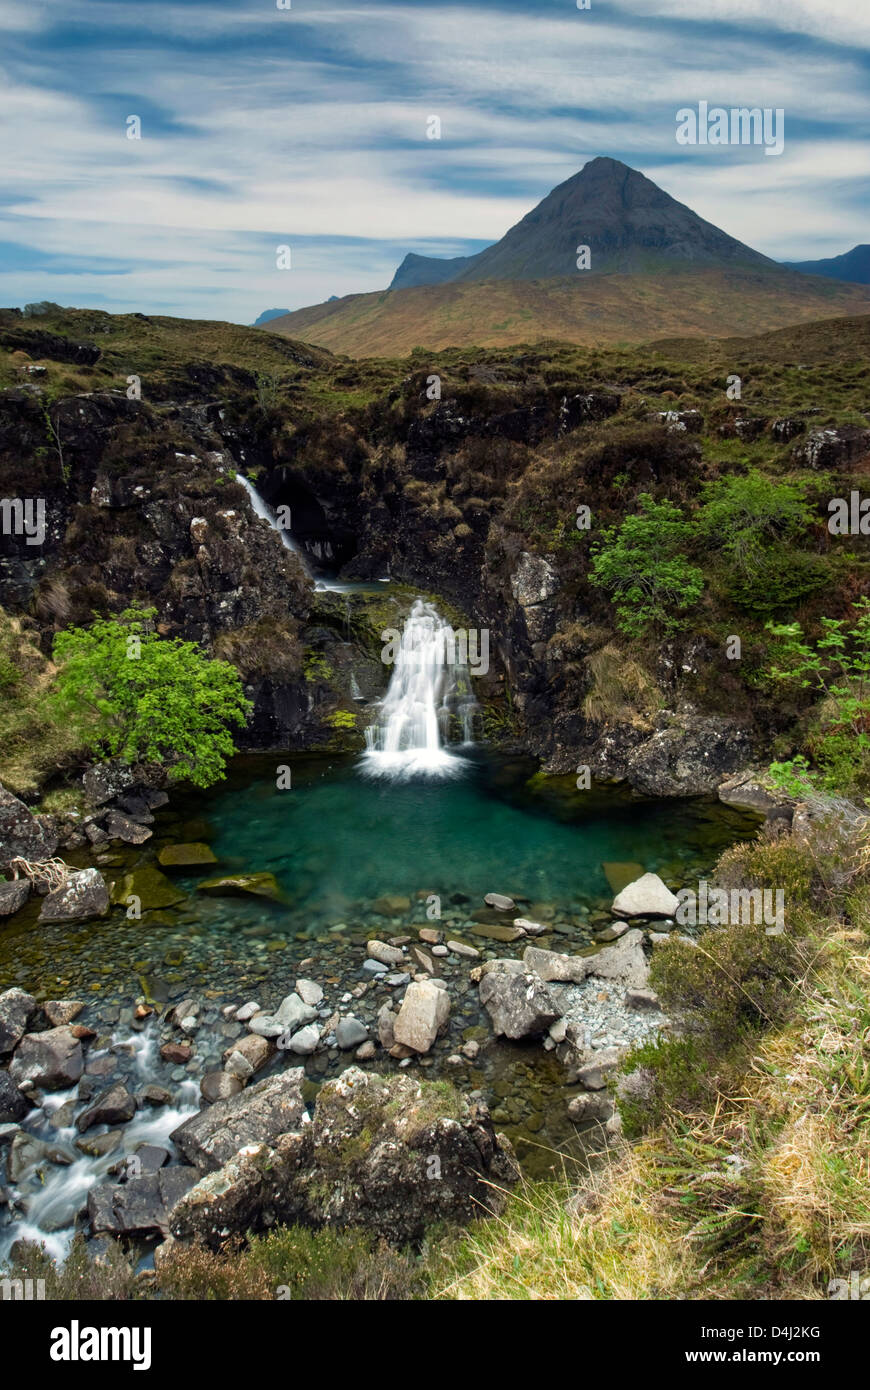 Waterfall in the Cuillin mountains, Isle of Skye, Scotland Stock Photo